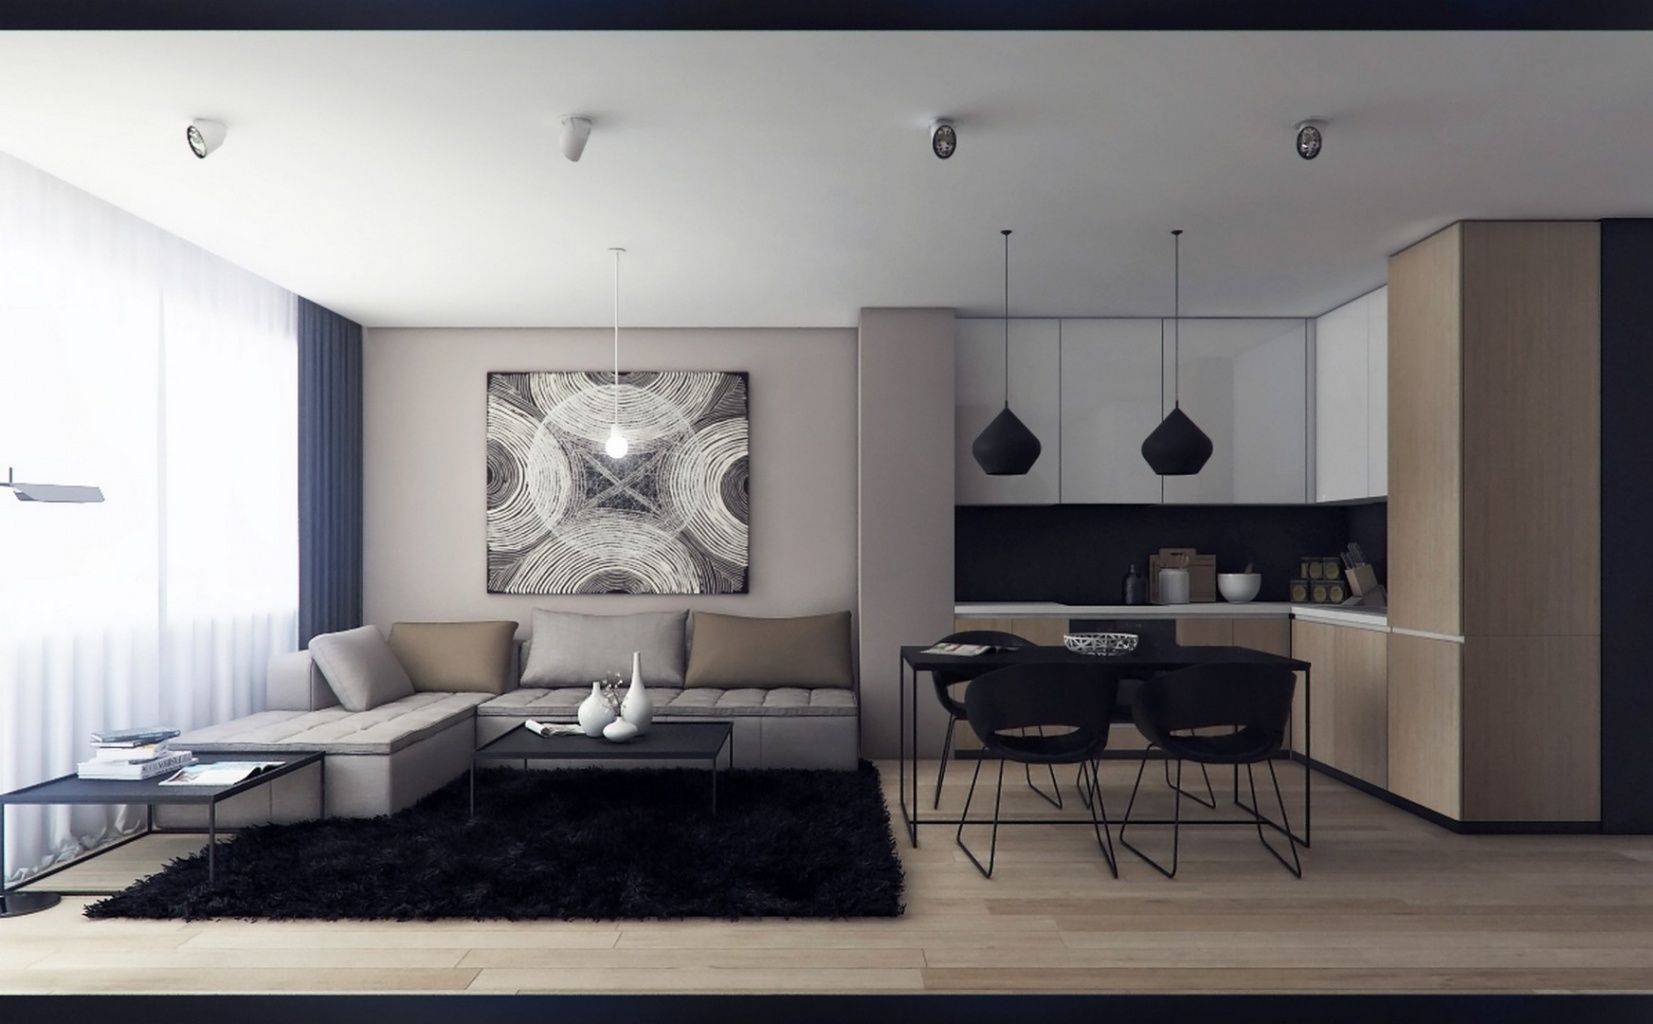 Квартира в стиле минимализм (85 фото) - дизайн интерьера, идеи для ремонта и отделки